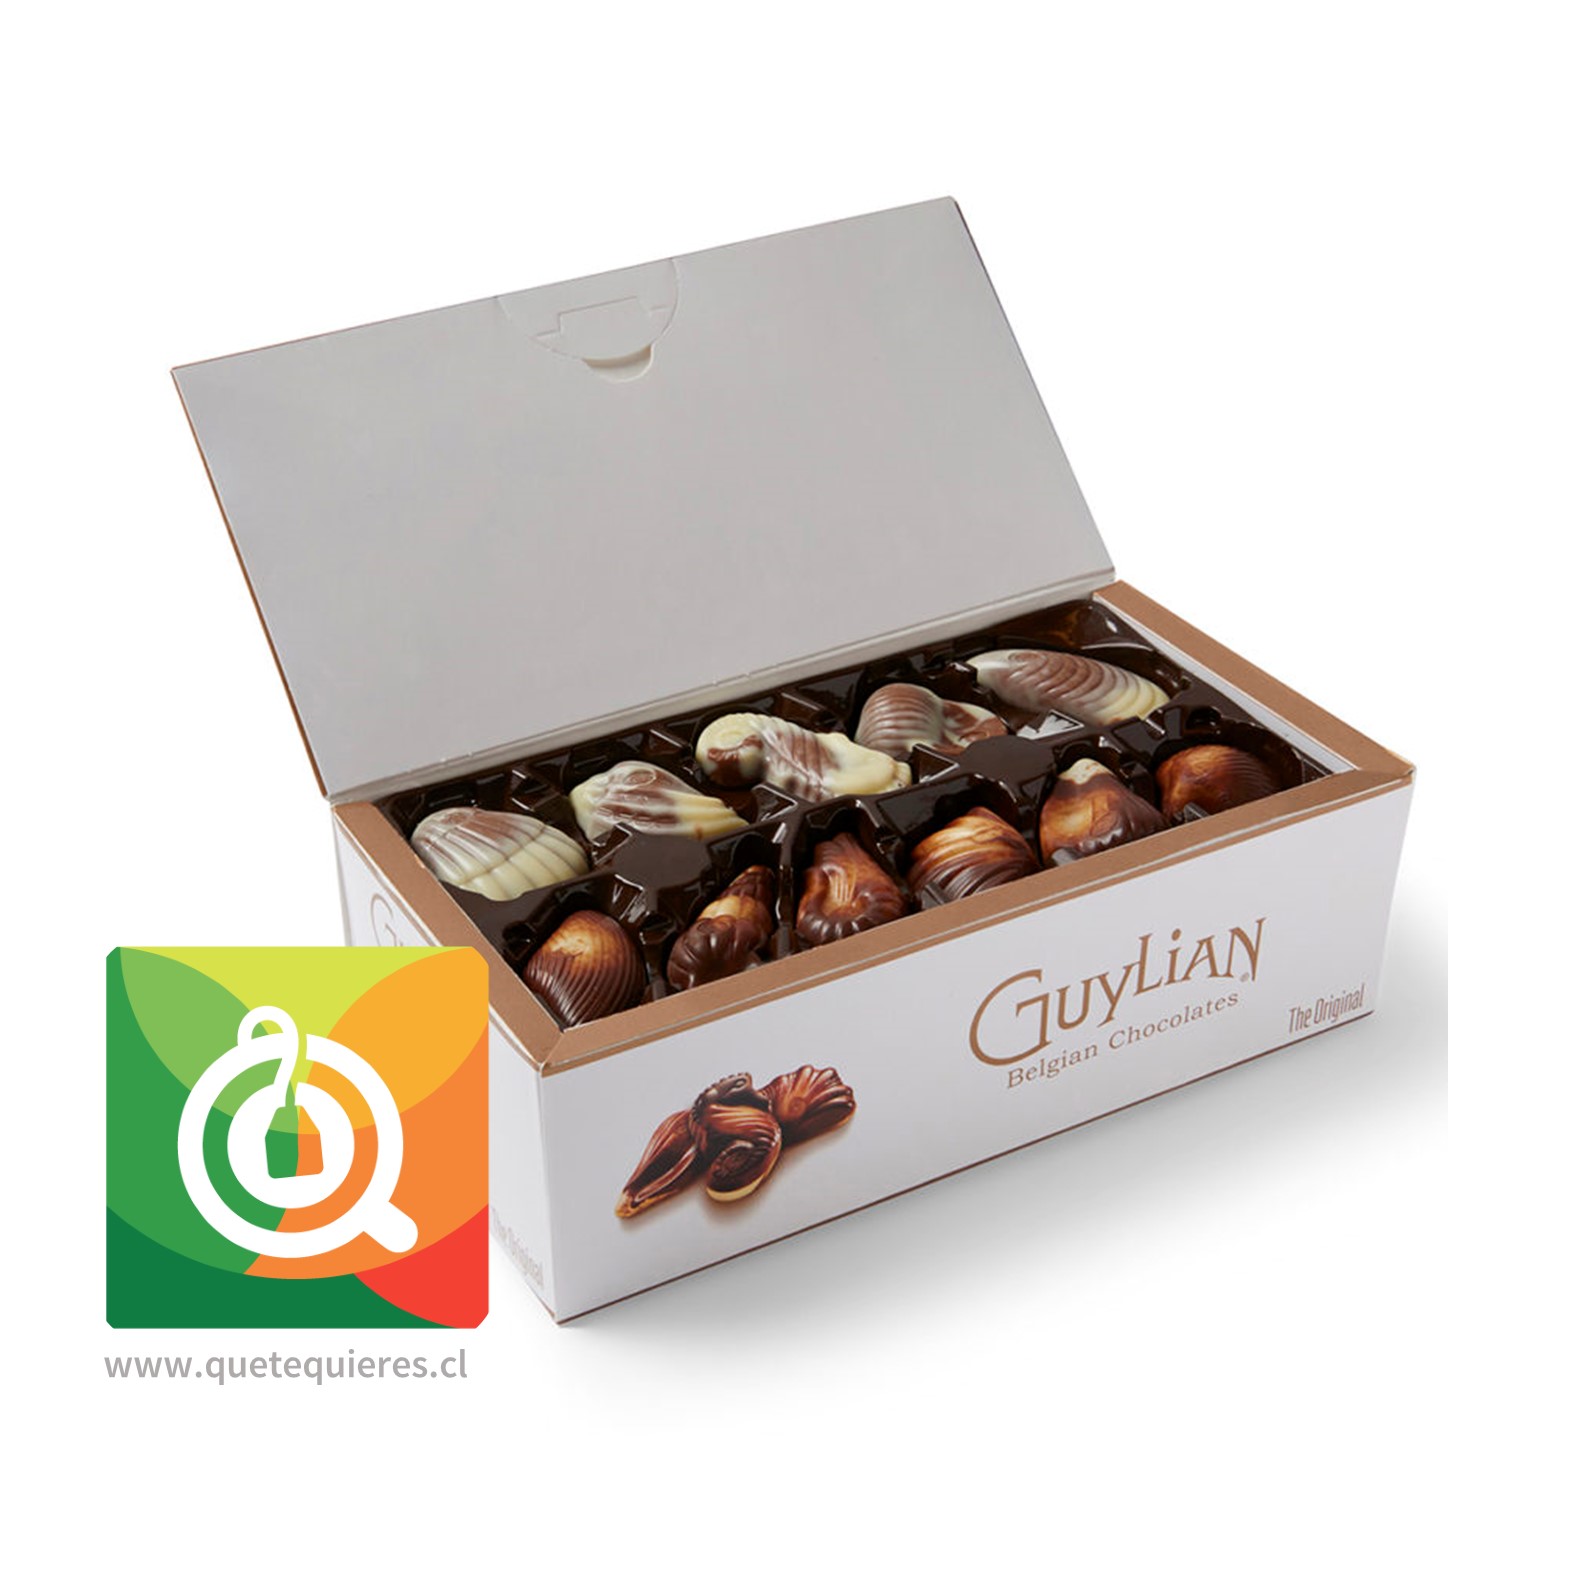 Guylian Bombon Chocolate Sea Shell Regalo Dorado 250 gr- Image 2